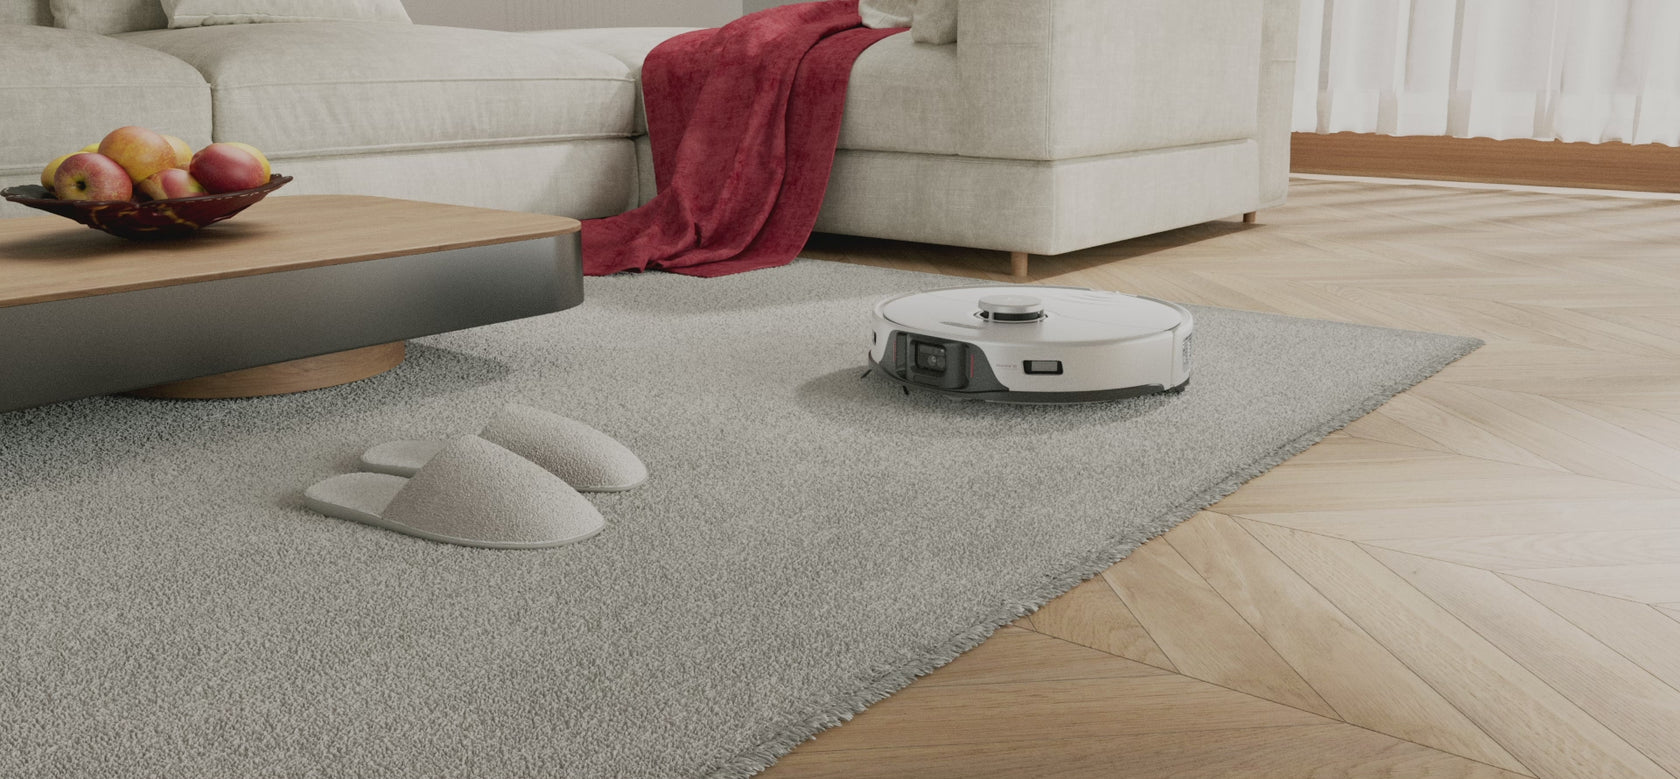 Roborock Robotic Vacuum and Mop Cleaner  - Cleaning Floor